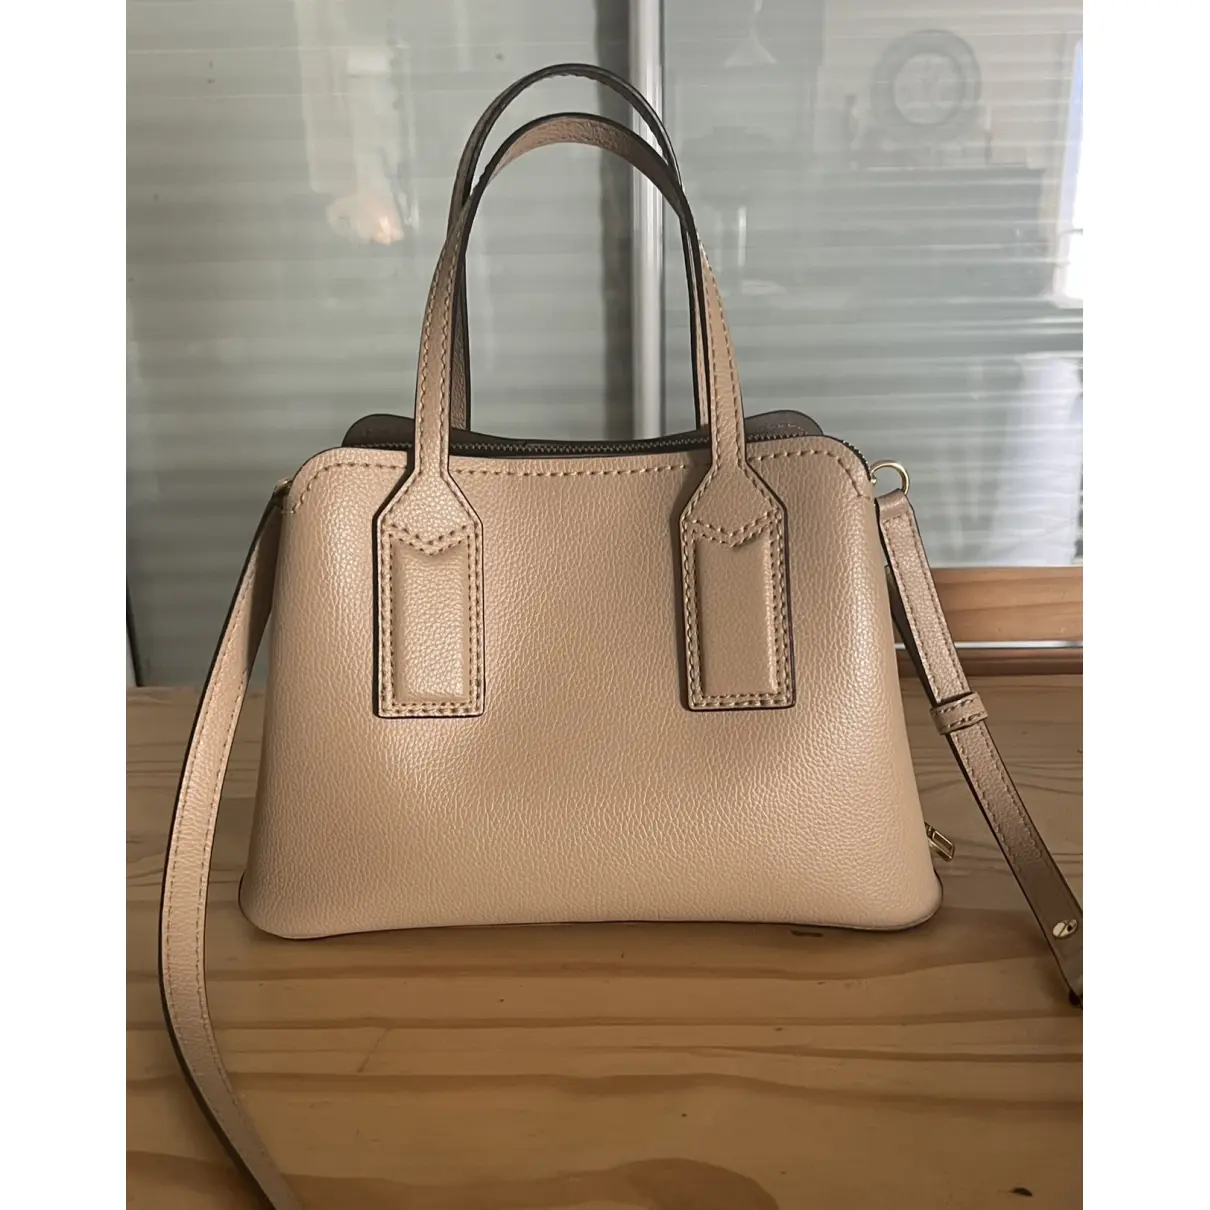 Buy Marc Jacobs The Editor leather handbag online